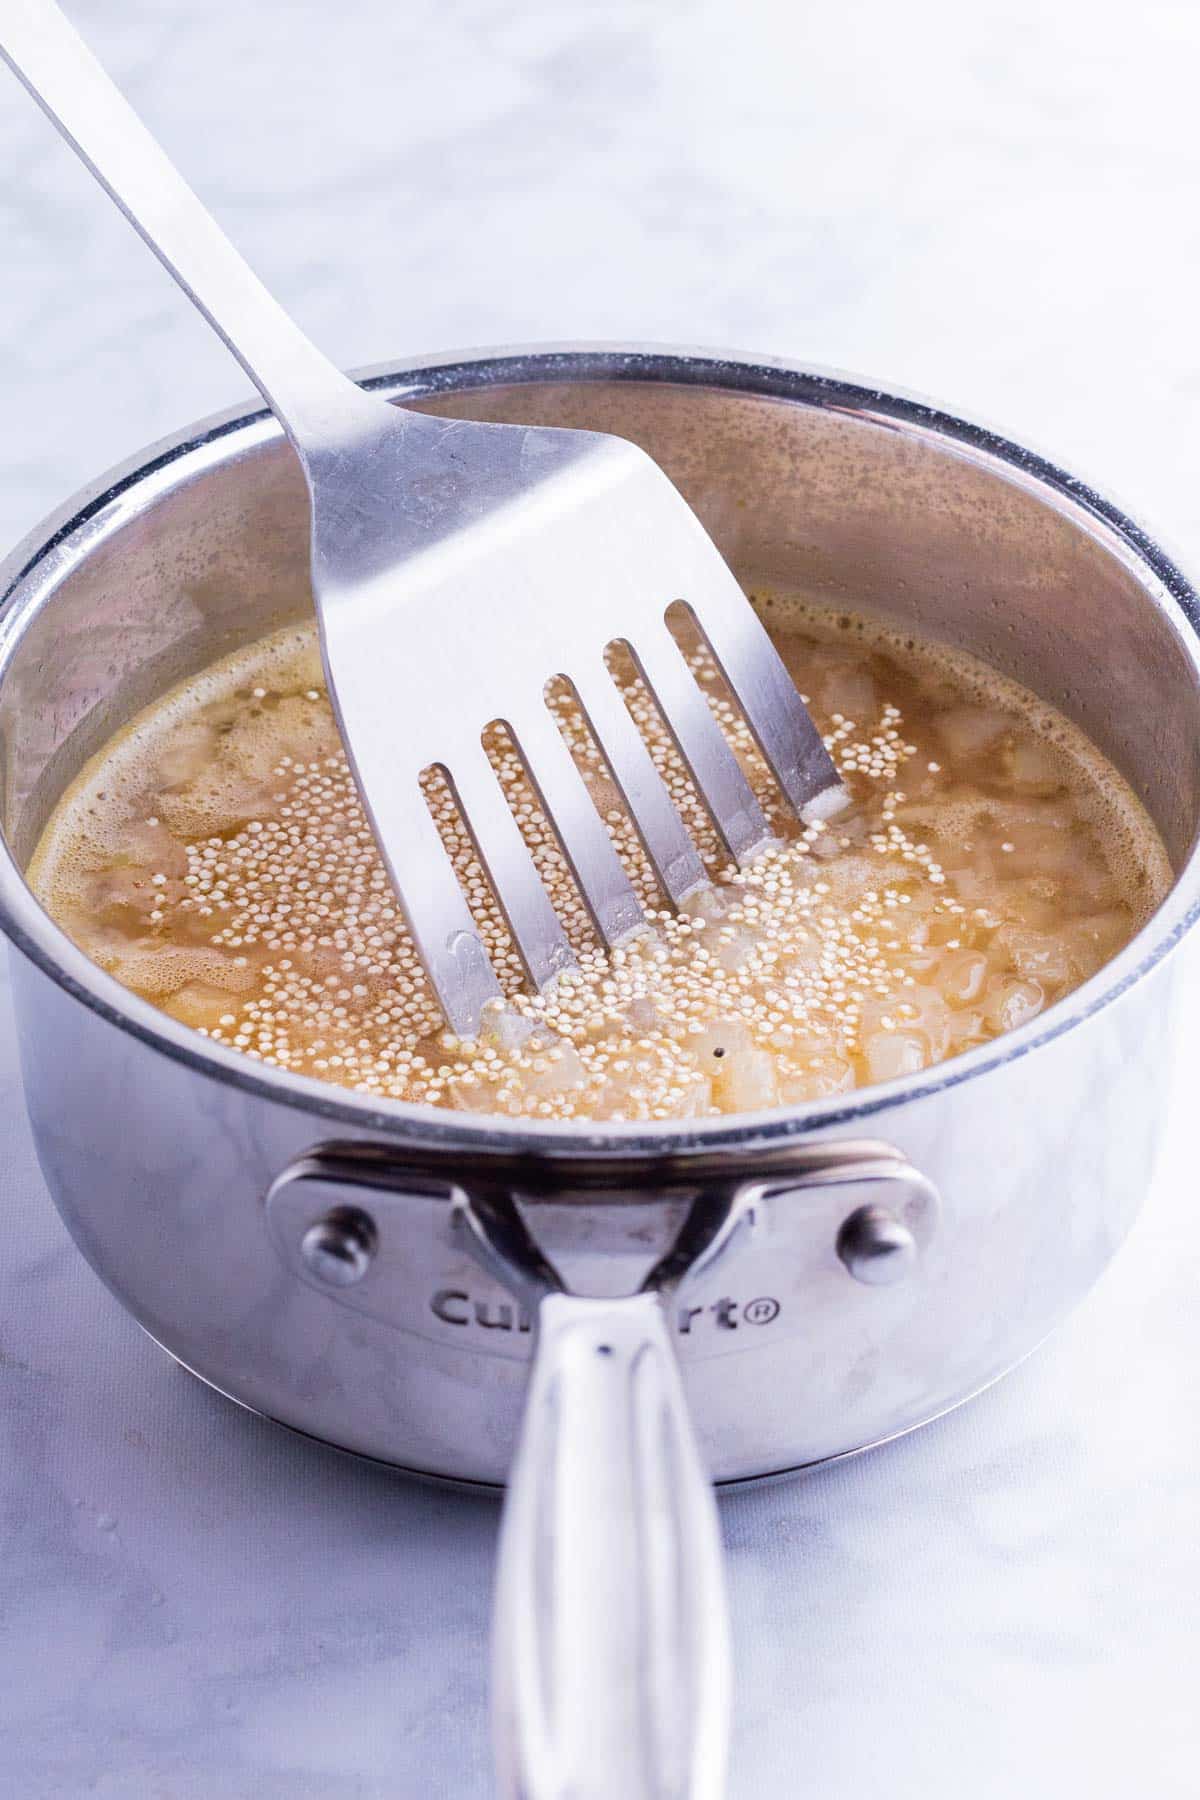 A spatula stirs the broth and quinoa into the pot.